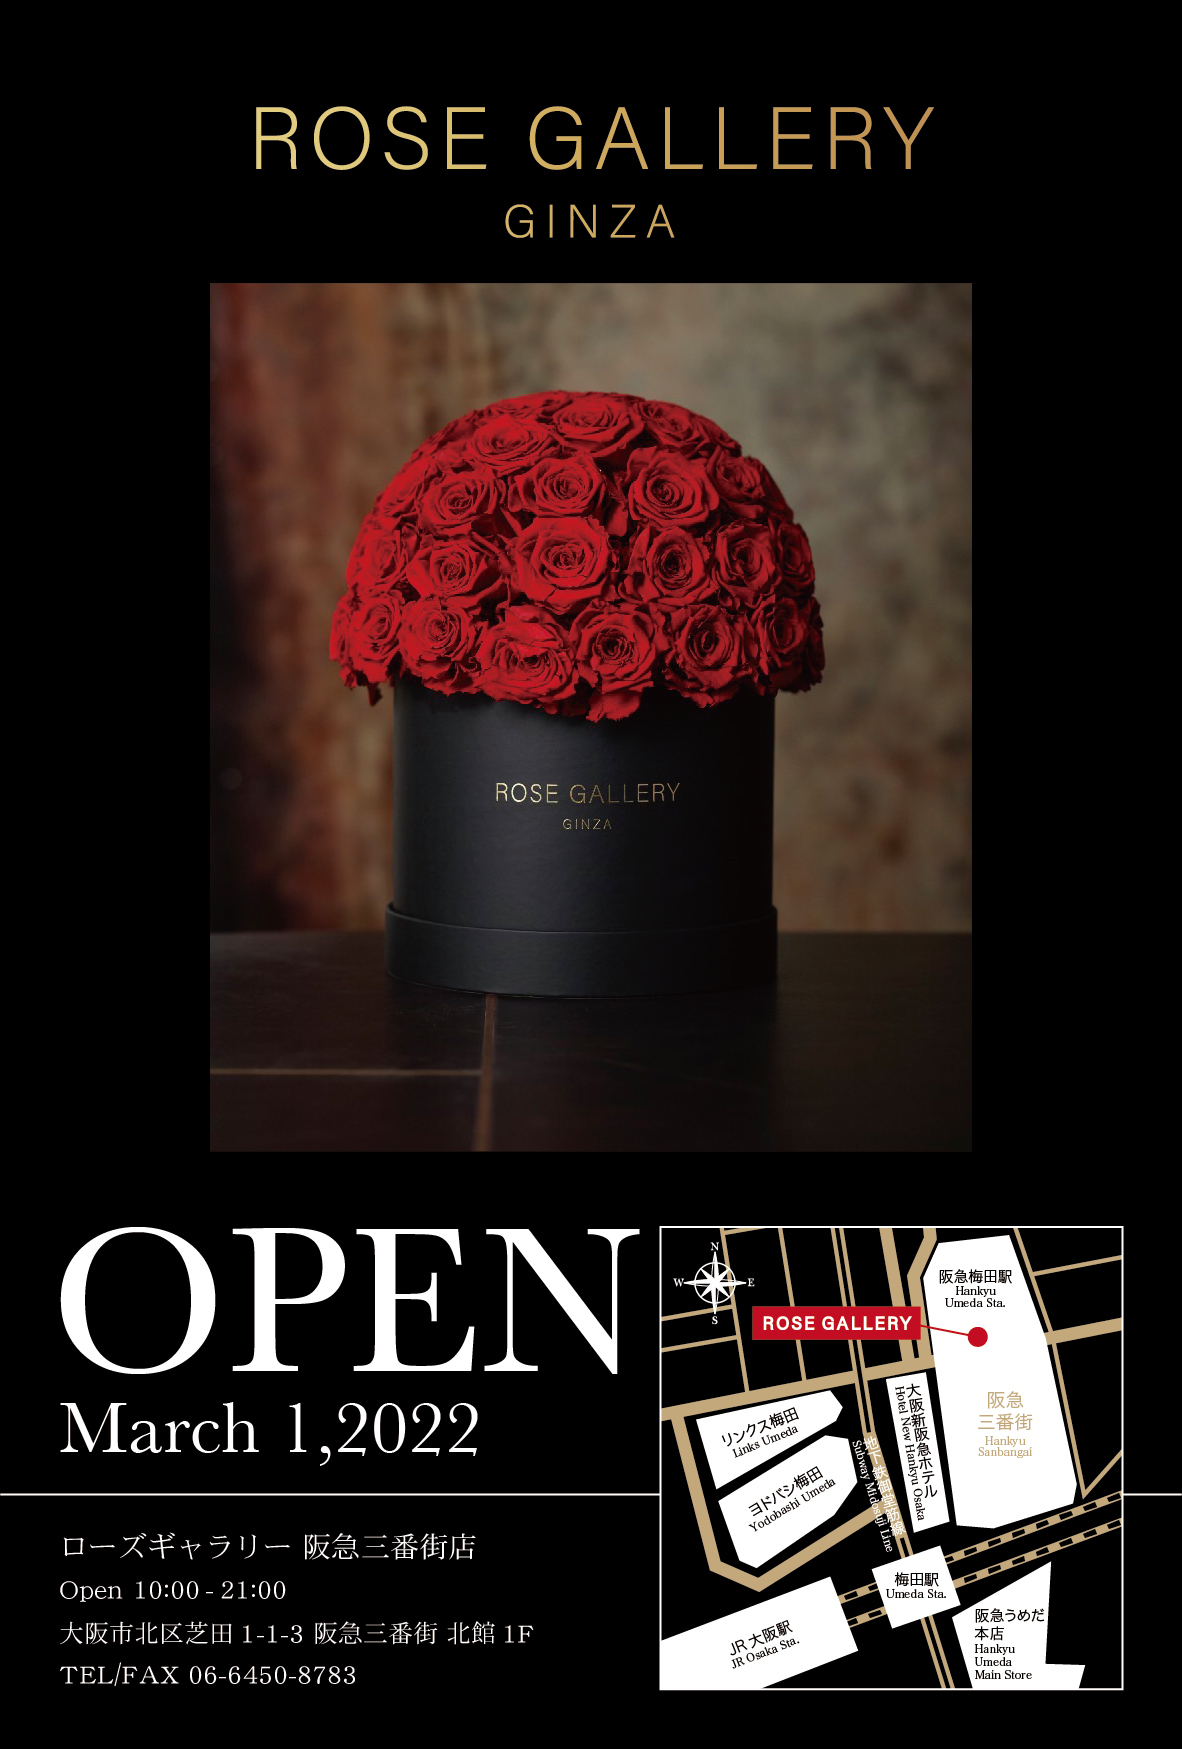 関西初出店 1975年誕生 東京高級バラ専門店 Rosegallery Ginza 大阪梅田に3月1日open Newscast